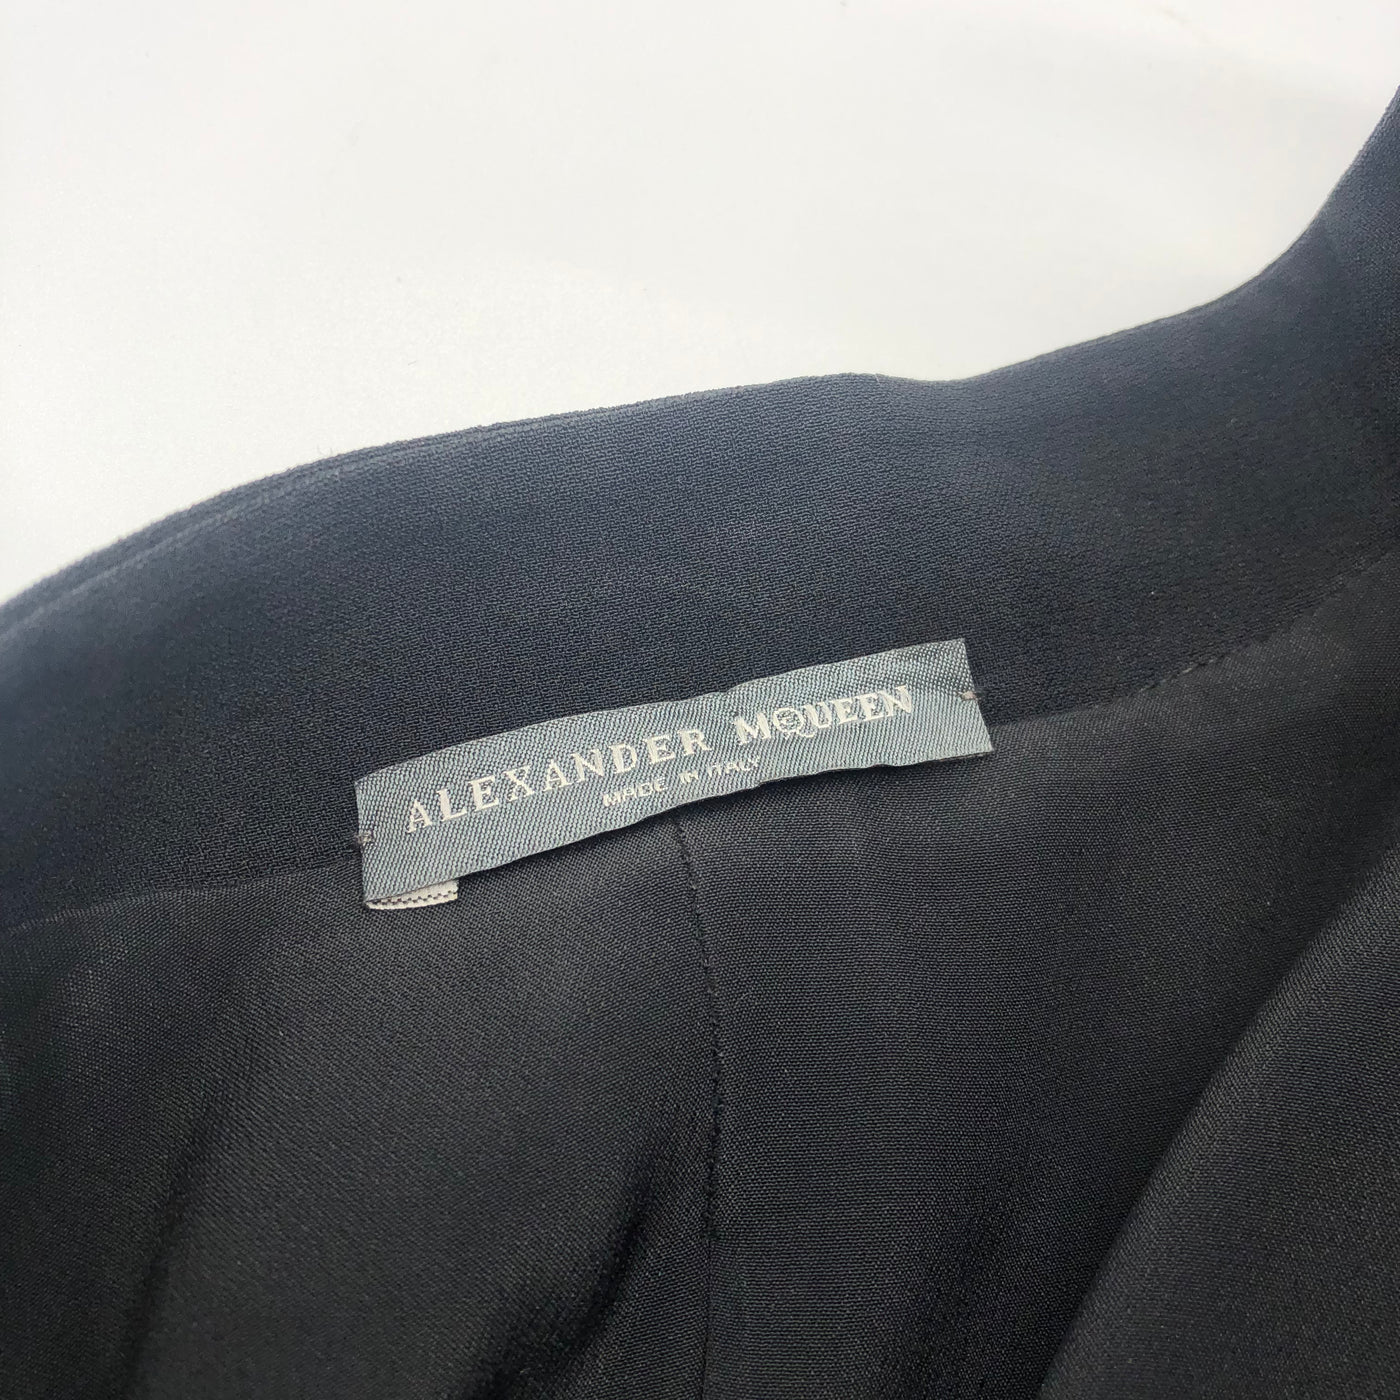 ALEXANDER MCQUEEN Tuxedo dress size 10uk RRP: Approx. £2390